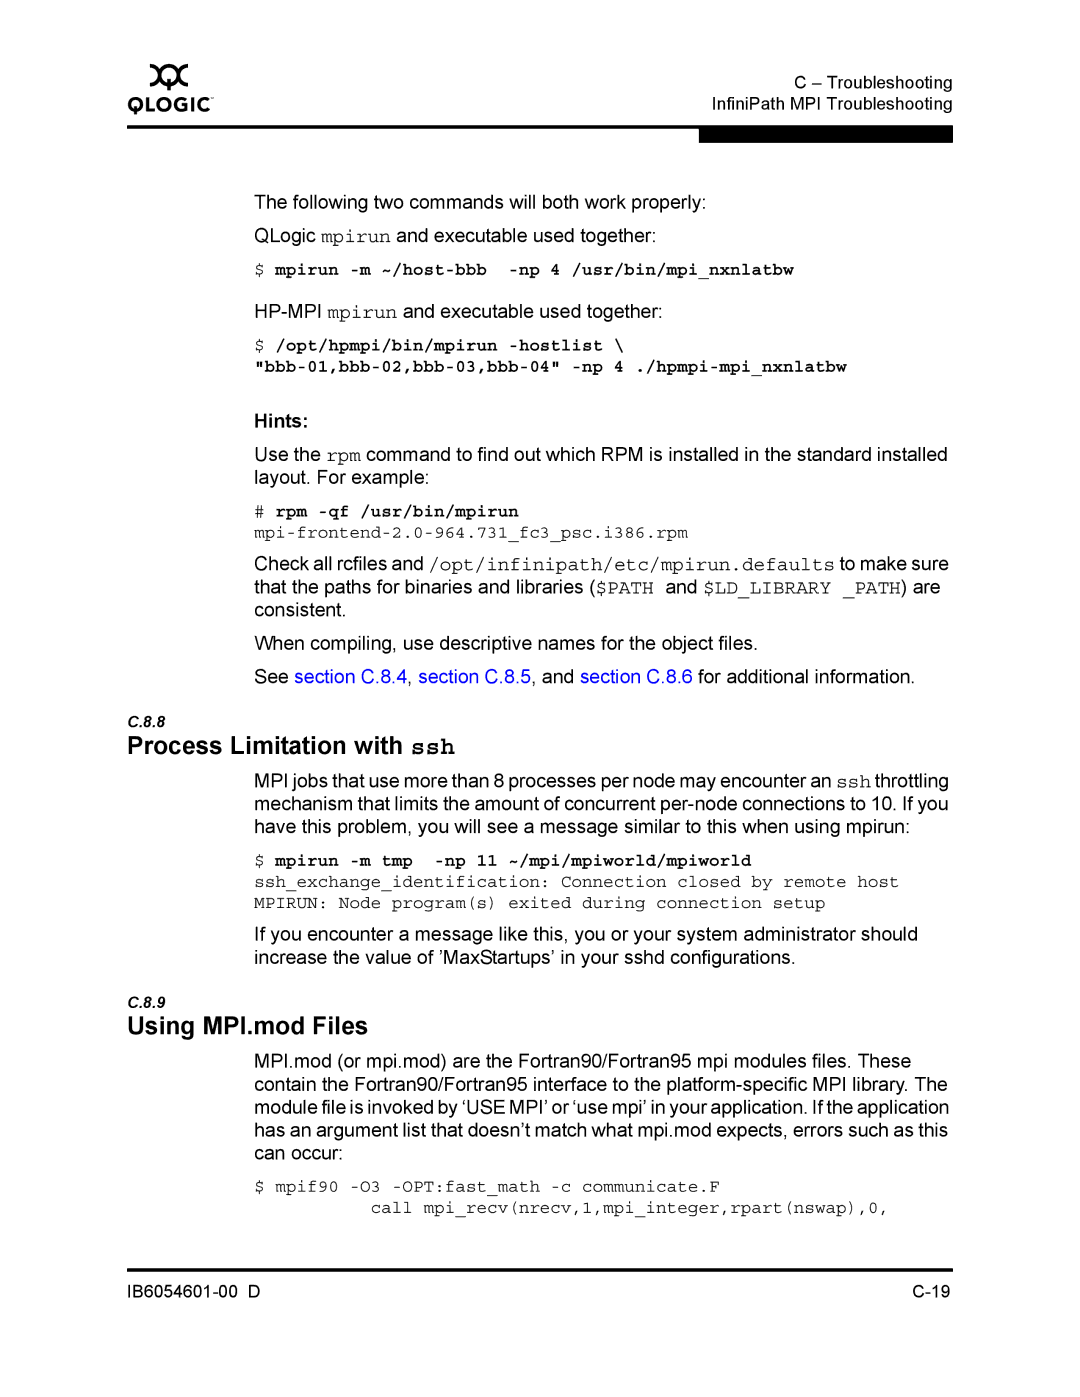 Q-Logic IB6054601-00 D manual Using MPI.mod Files, HP-MPI mpirun and executable used together 